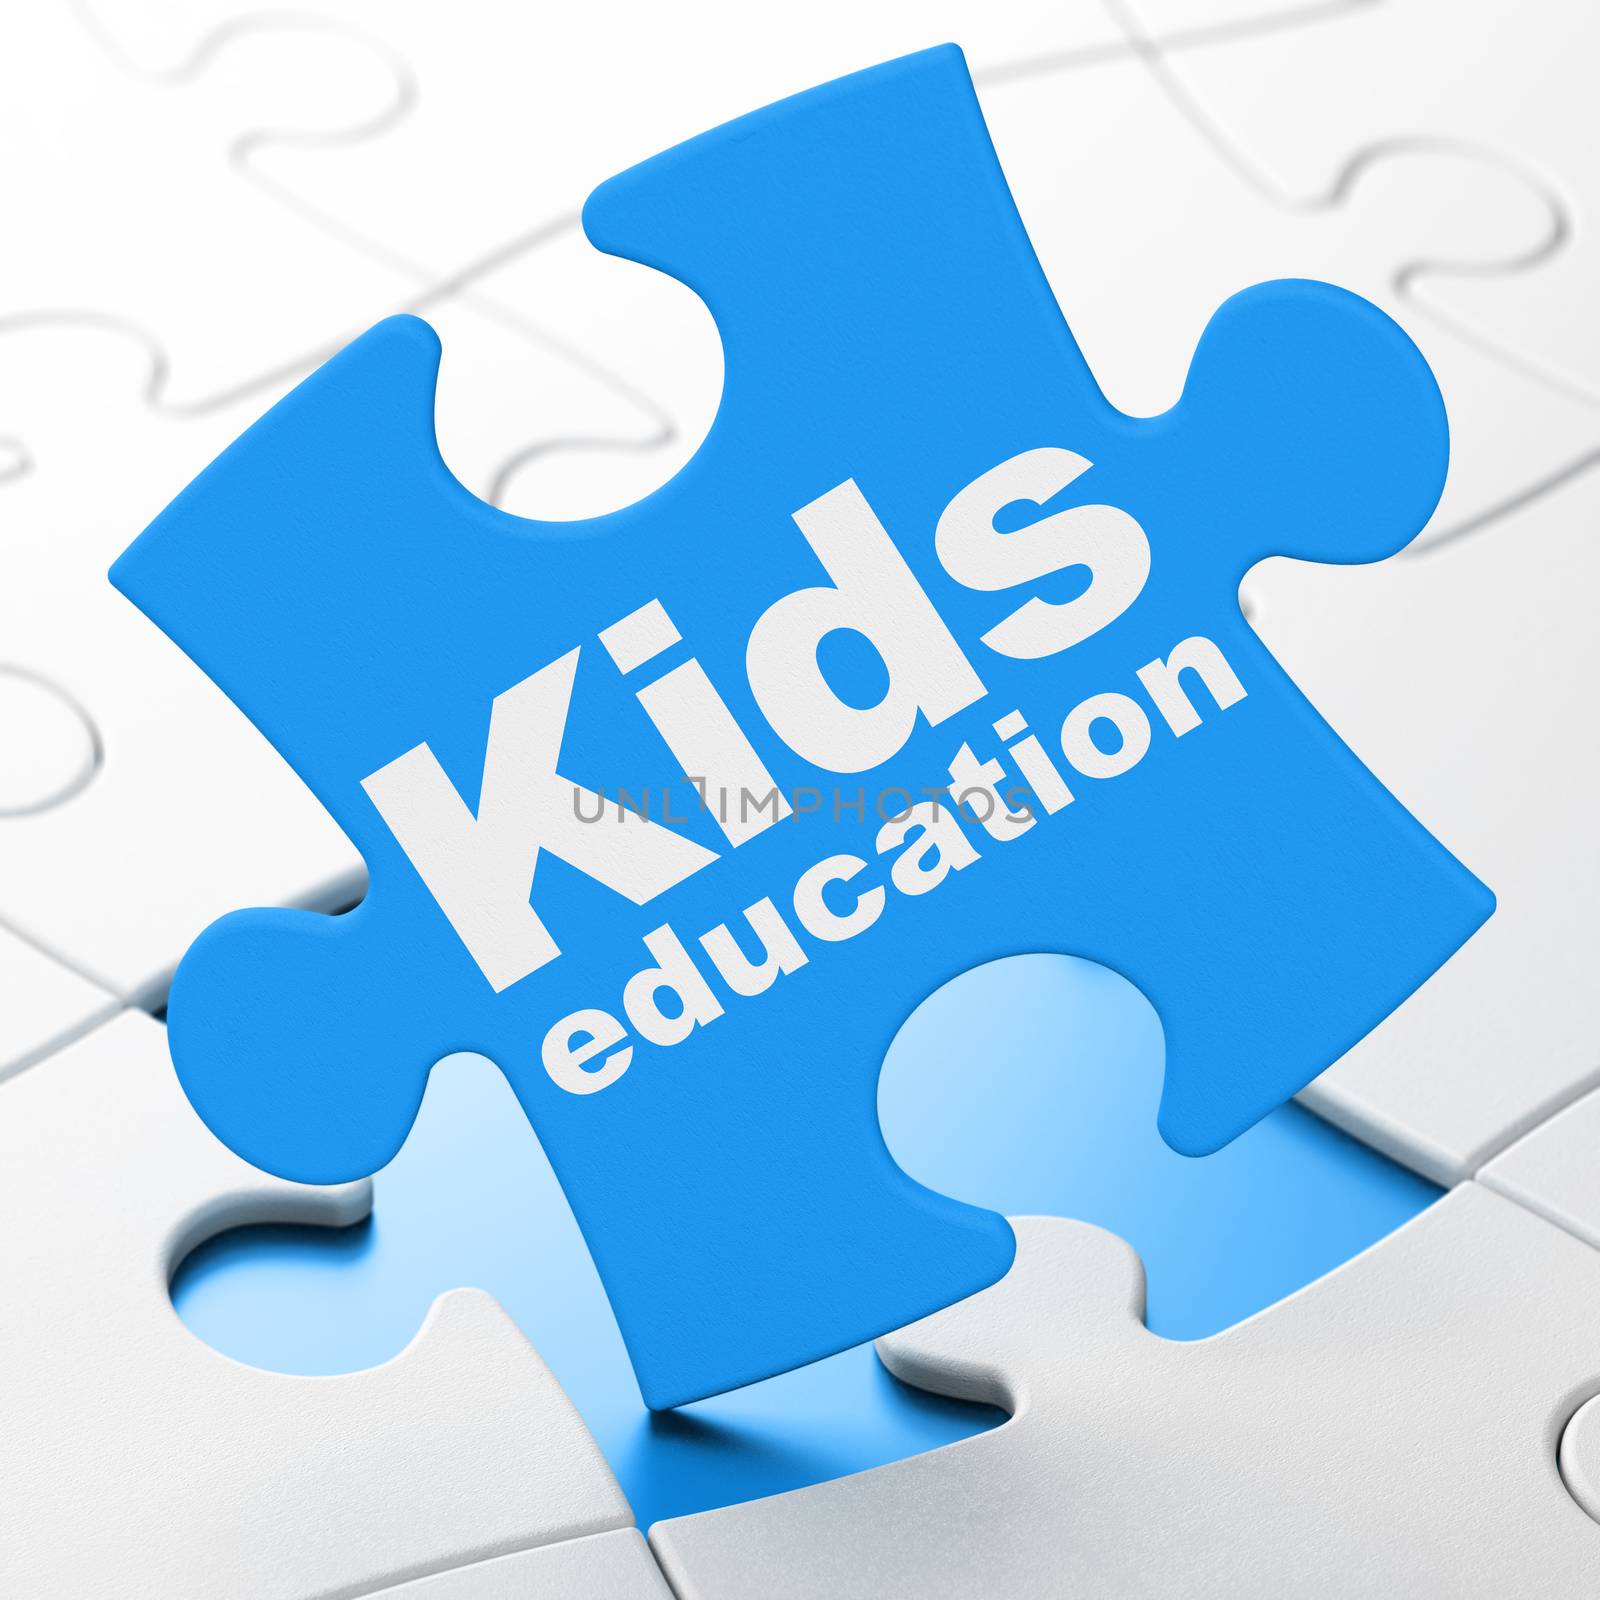 Education concept: Kids Education on Blue puzzle pieces background, 3D rendering